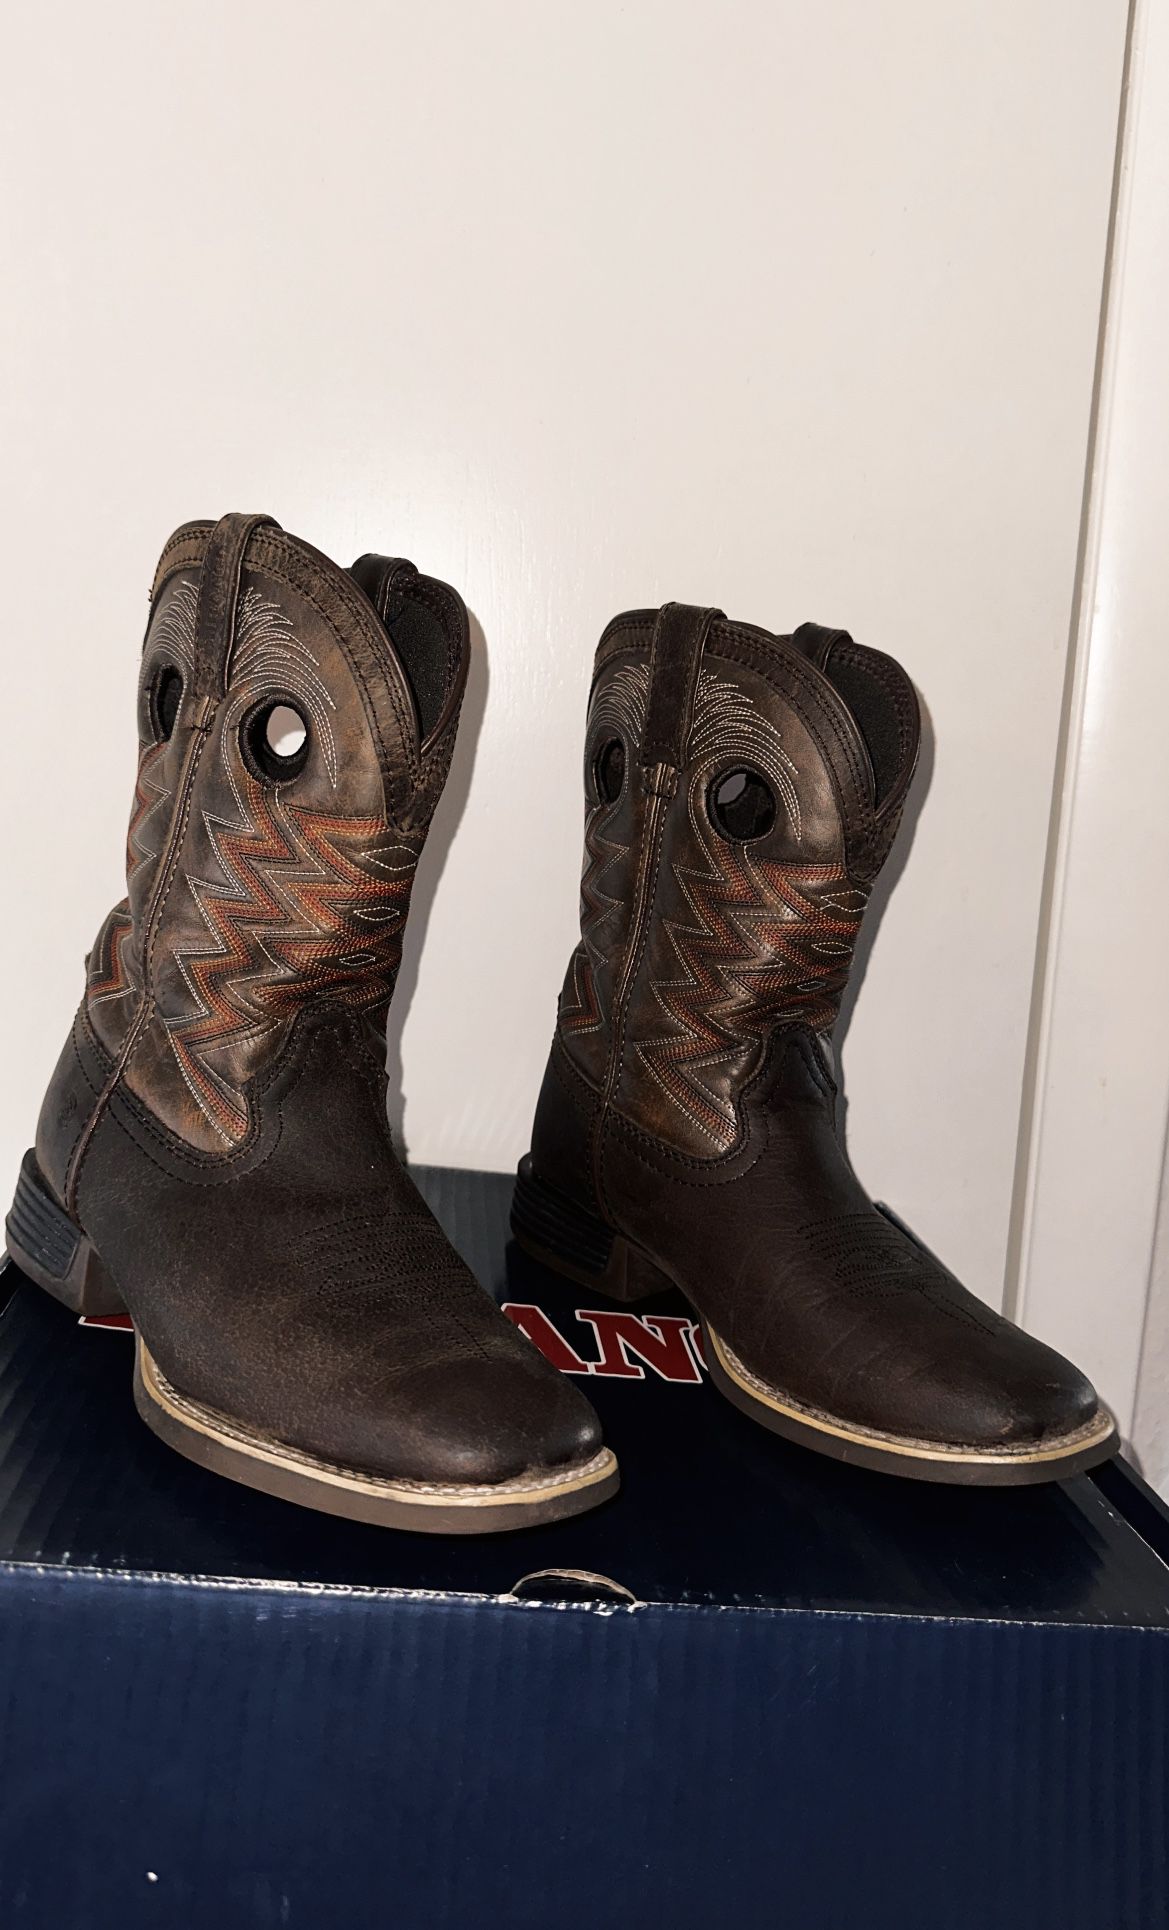 Durango Contry Wéstern Boots 